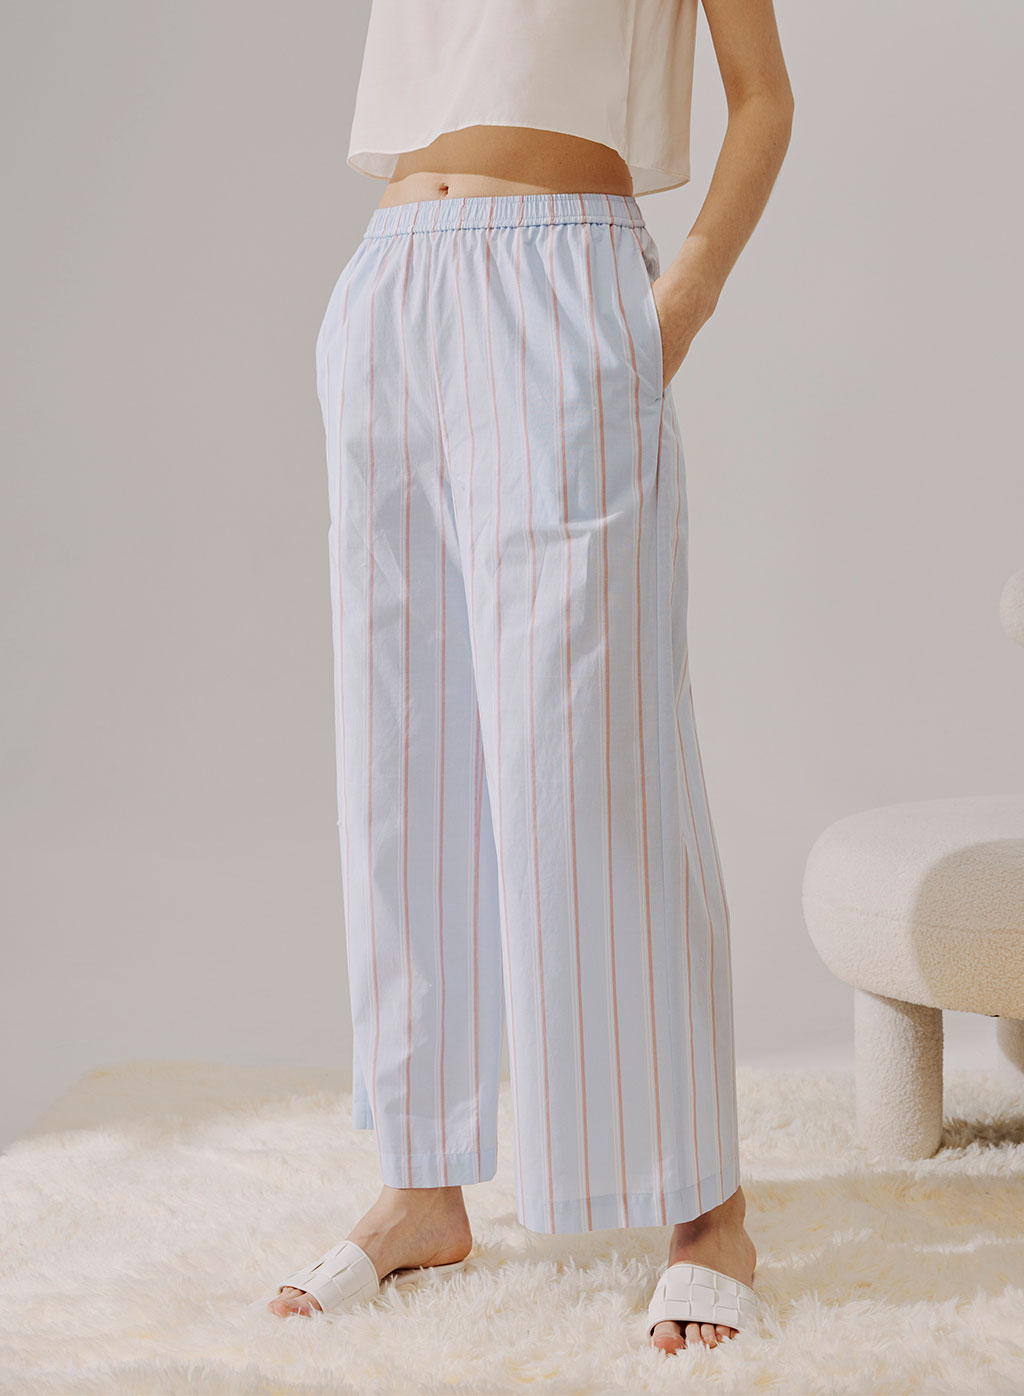 Sailor Striped Pajama Pants